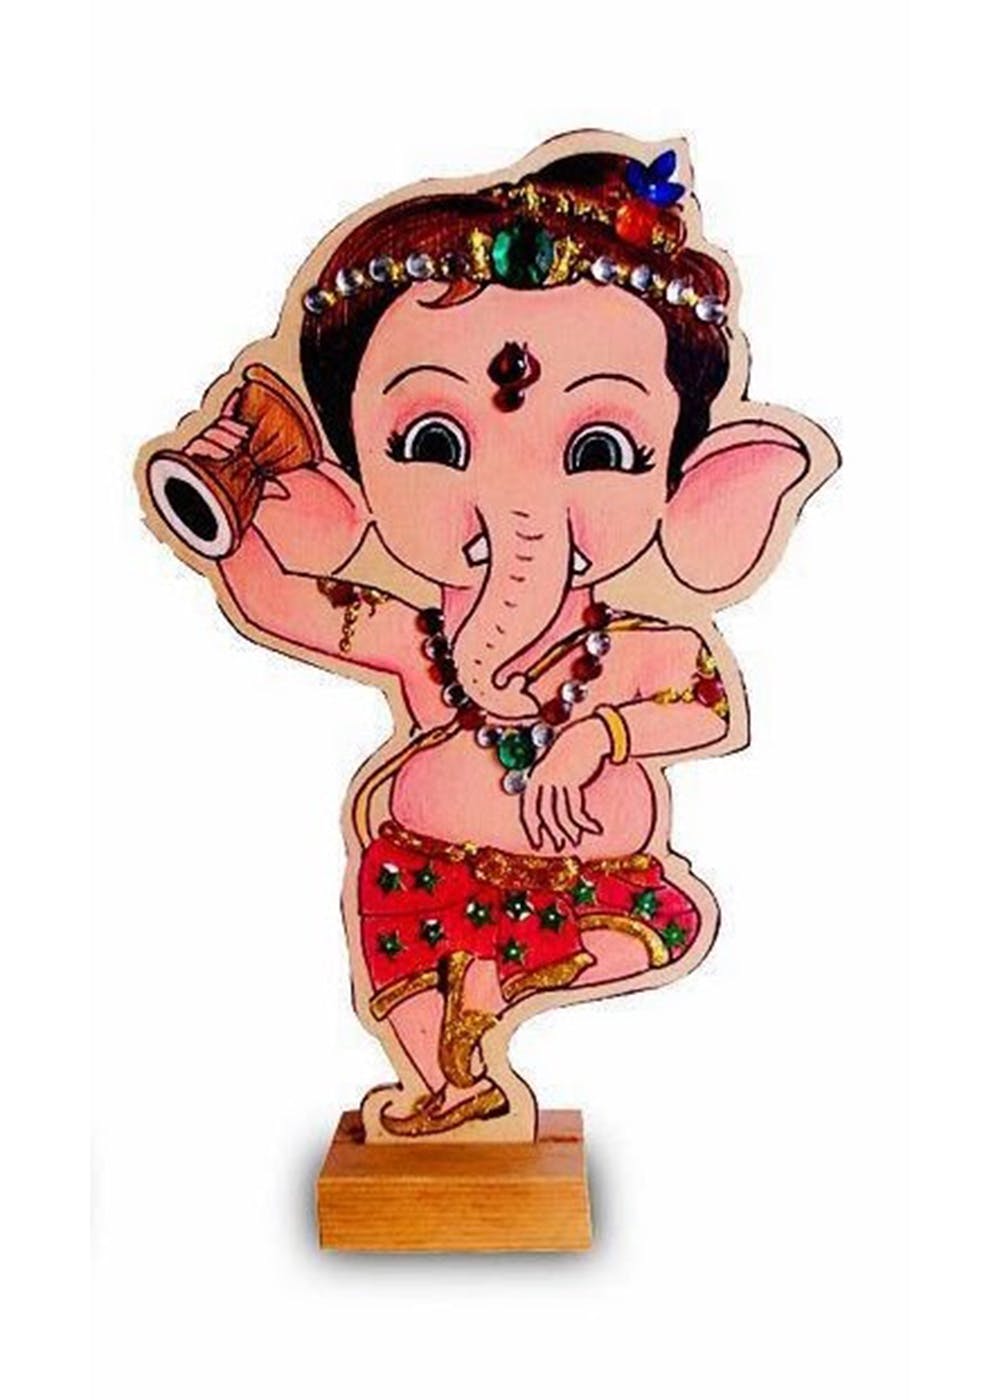 Cute Little Lord Ganesha Character Stock Illustration 1490239685   Shutterstock